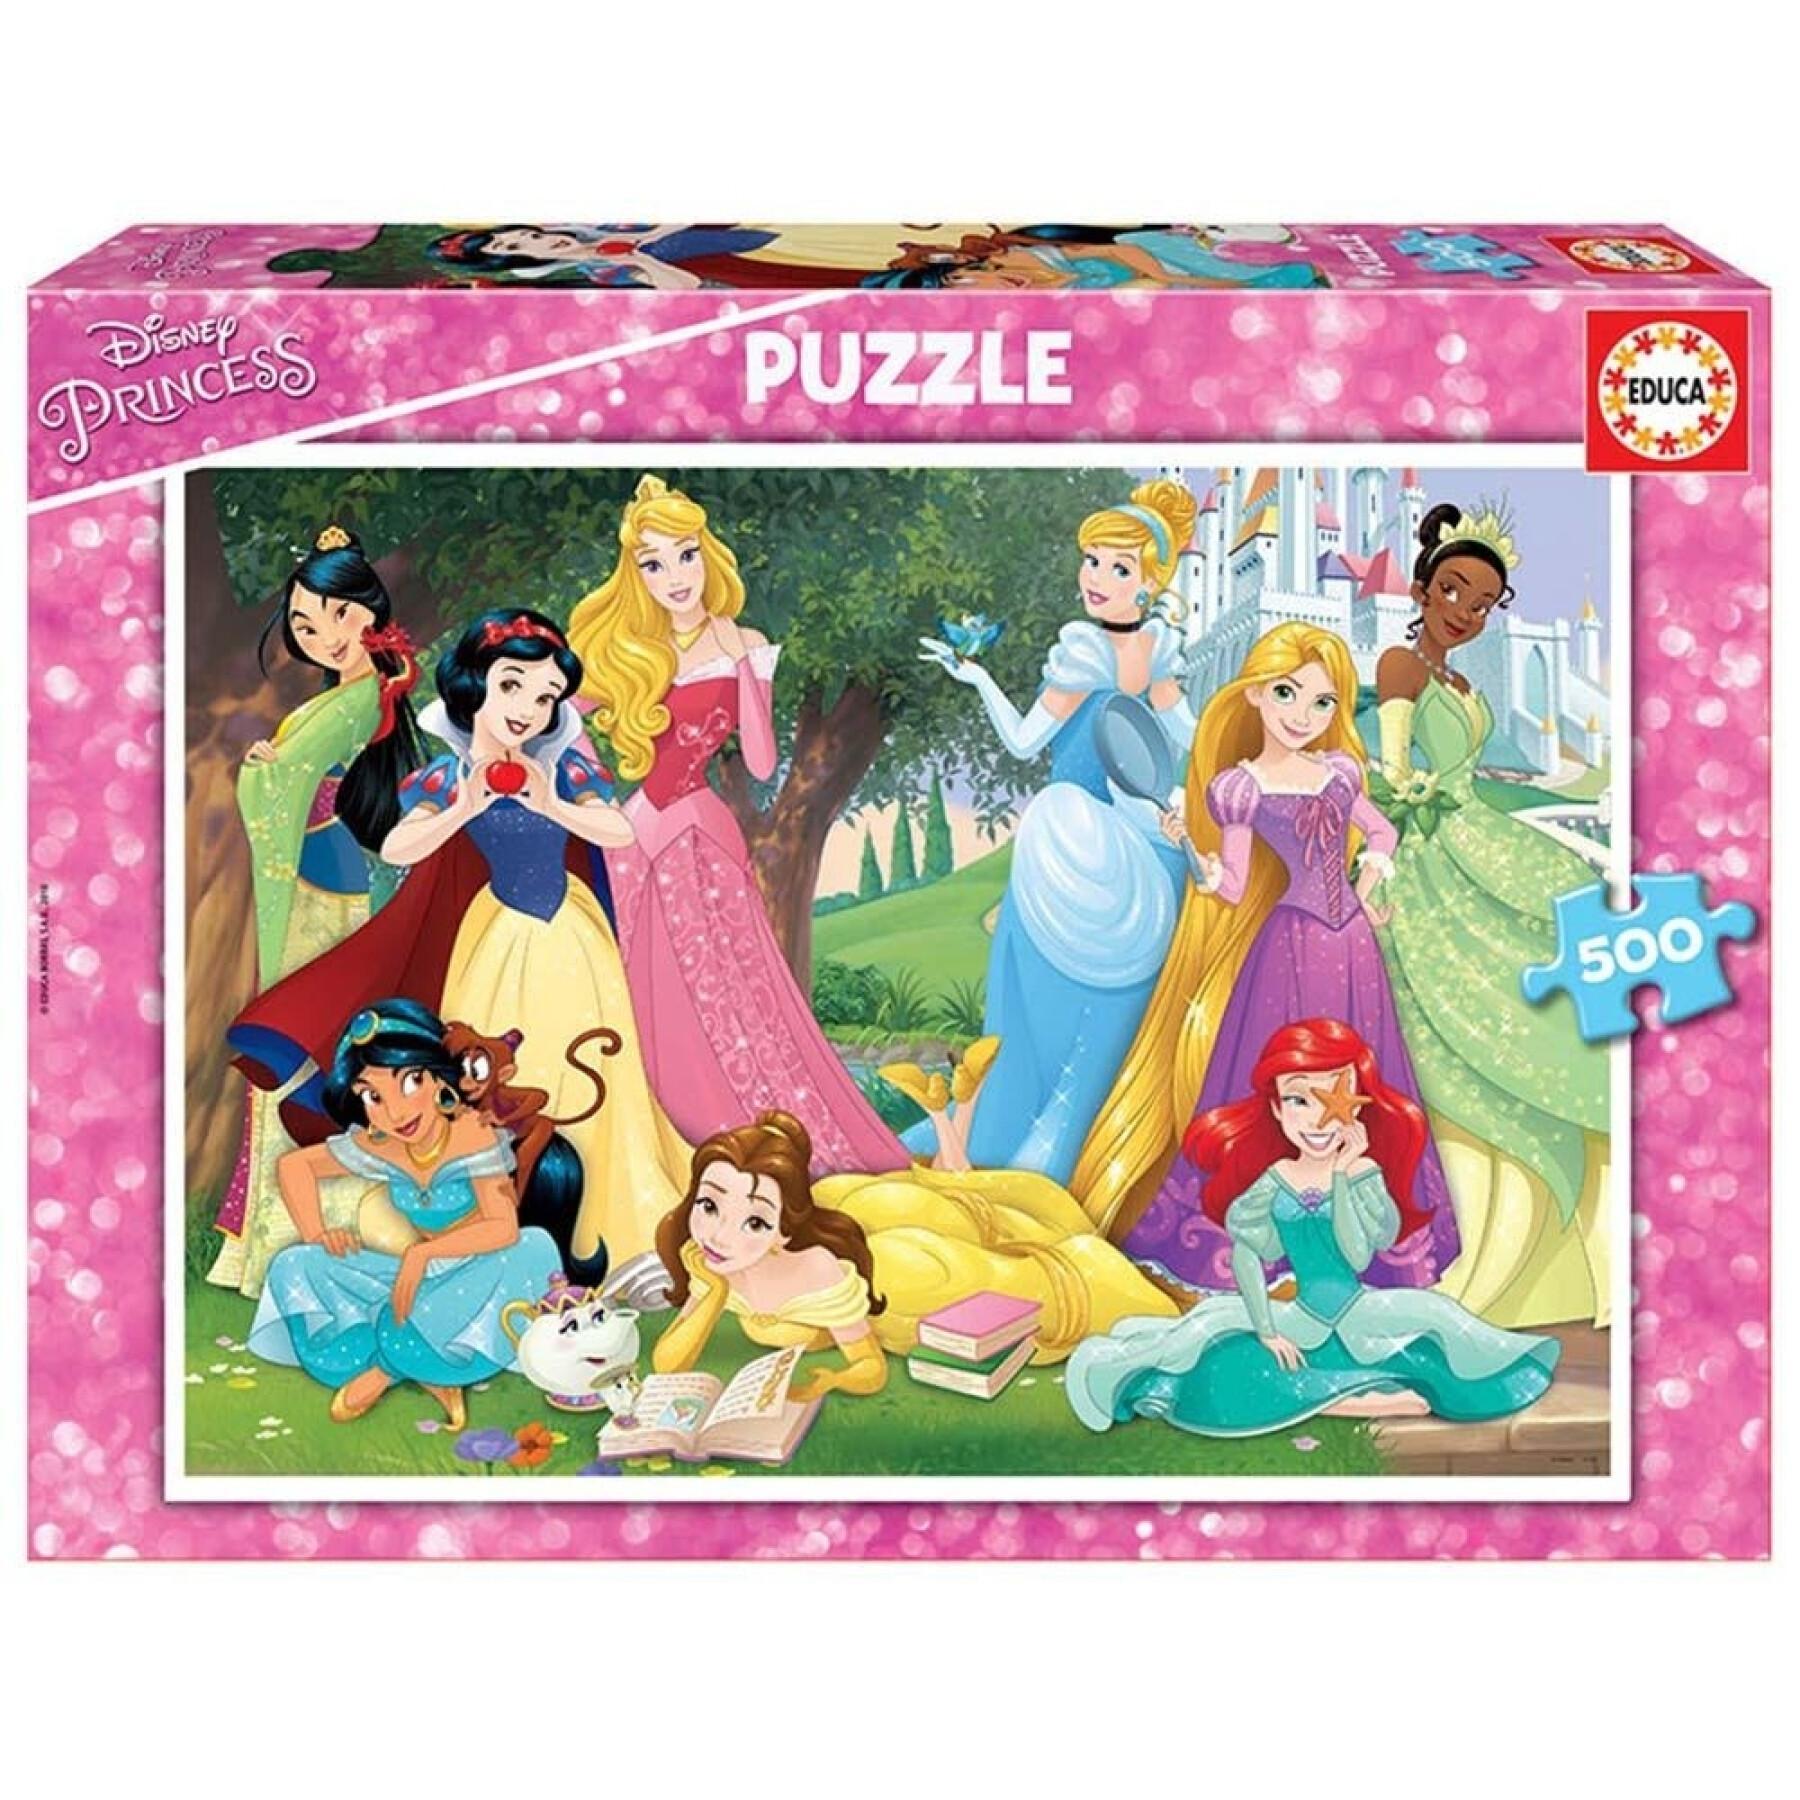 Puzzle da 500 pezzi Disney Princess